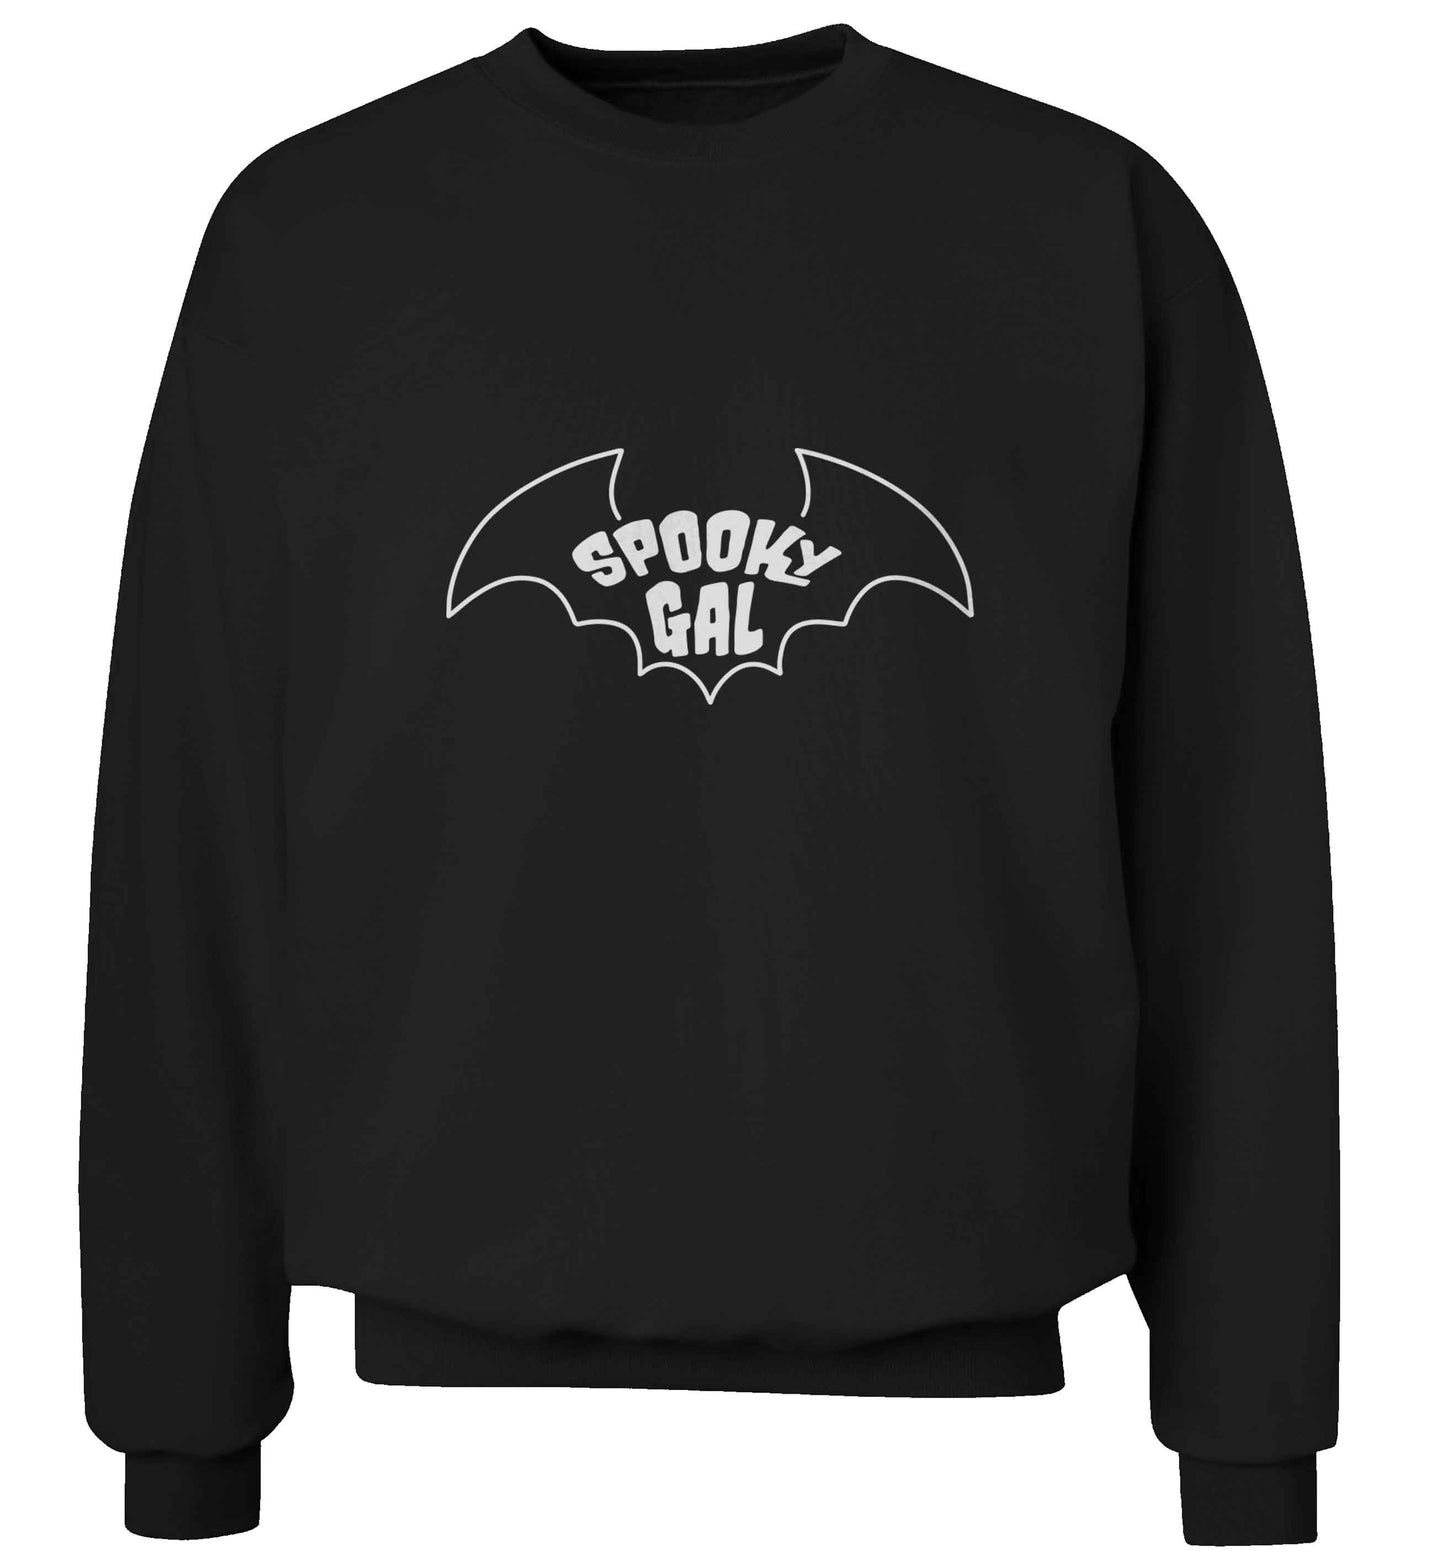 Spooky gal Kit adult's unisex black sweater 2XL